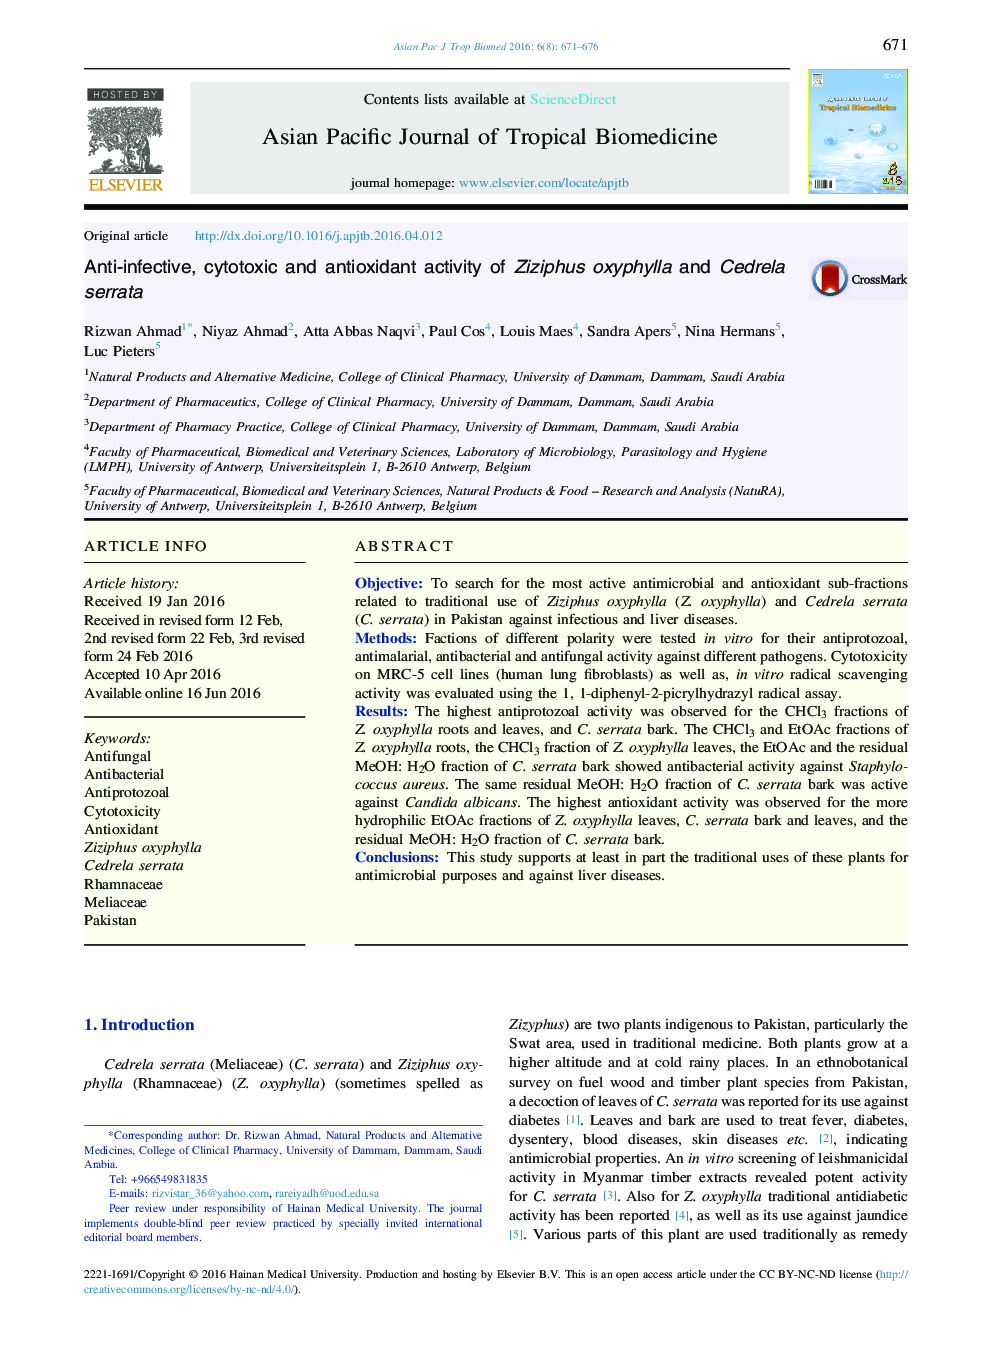 Anti-infective, cytotoxic and antioxidant activity of Ziziphus oxyphylla and Cedrela serrata 